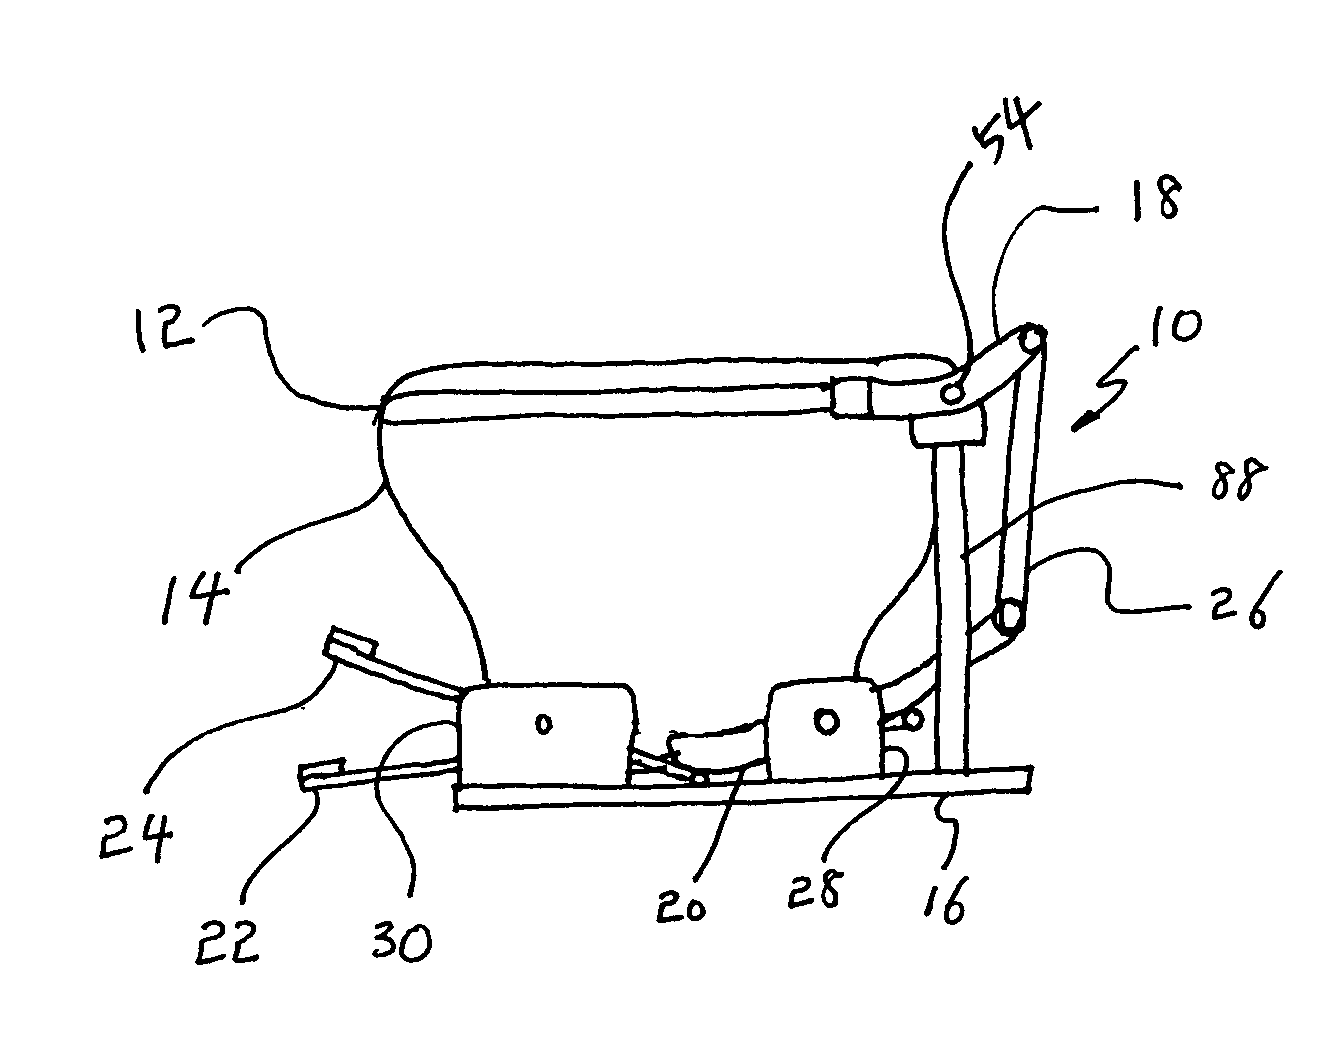 Toilet seat tilting device